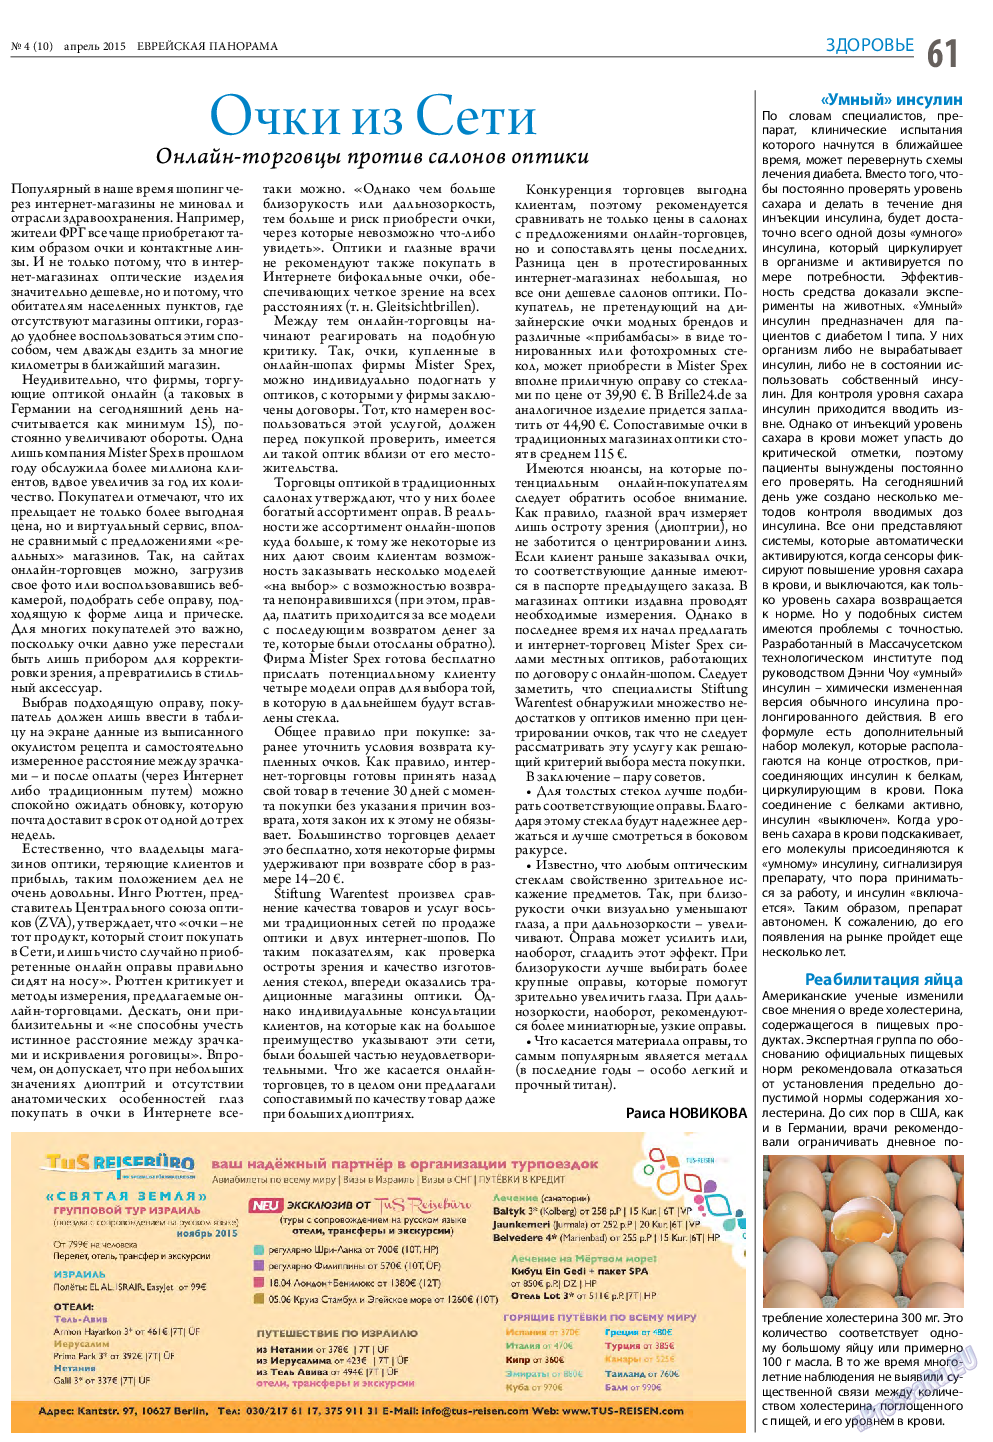 Еврейская панорама, газета. 2015 №4 стр.61